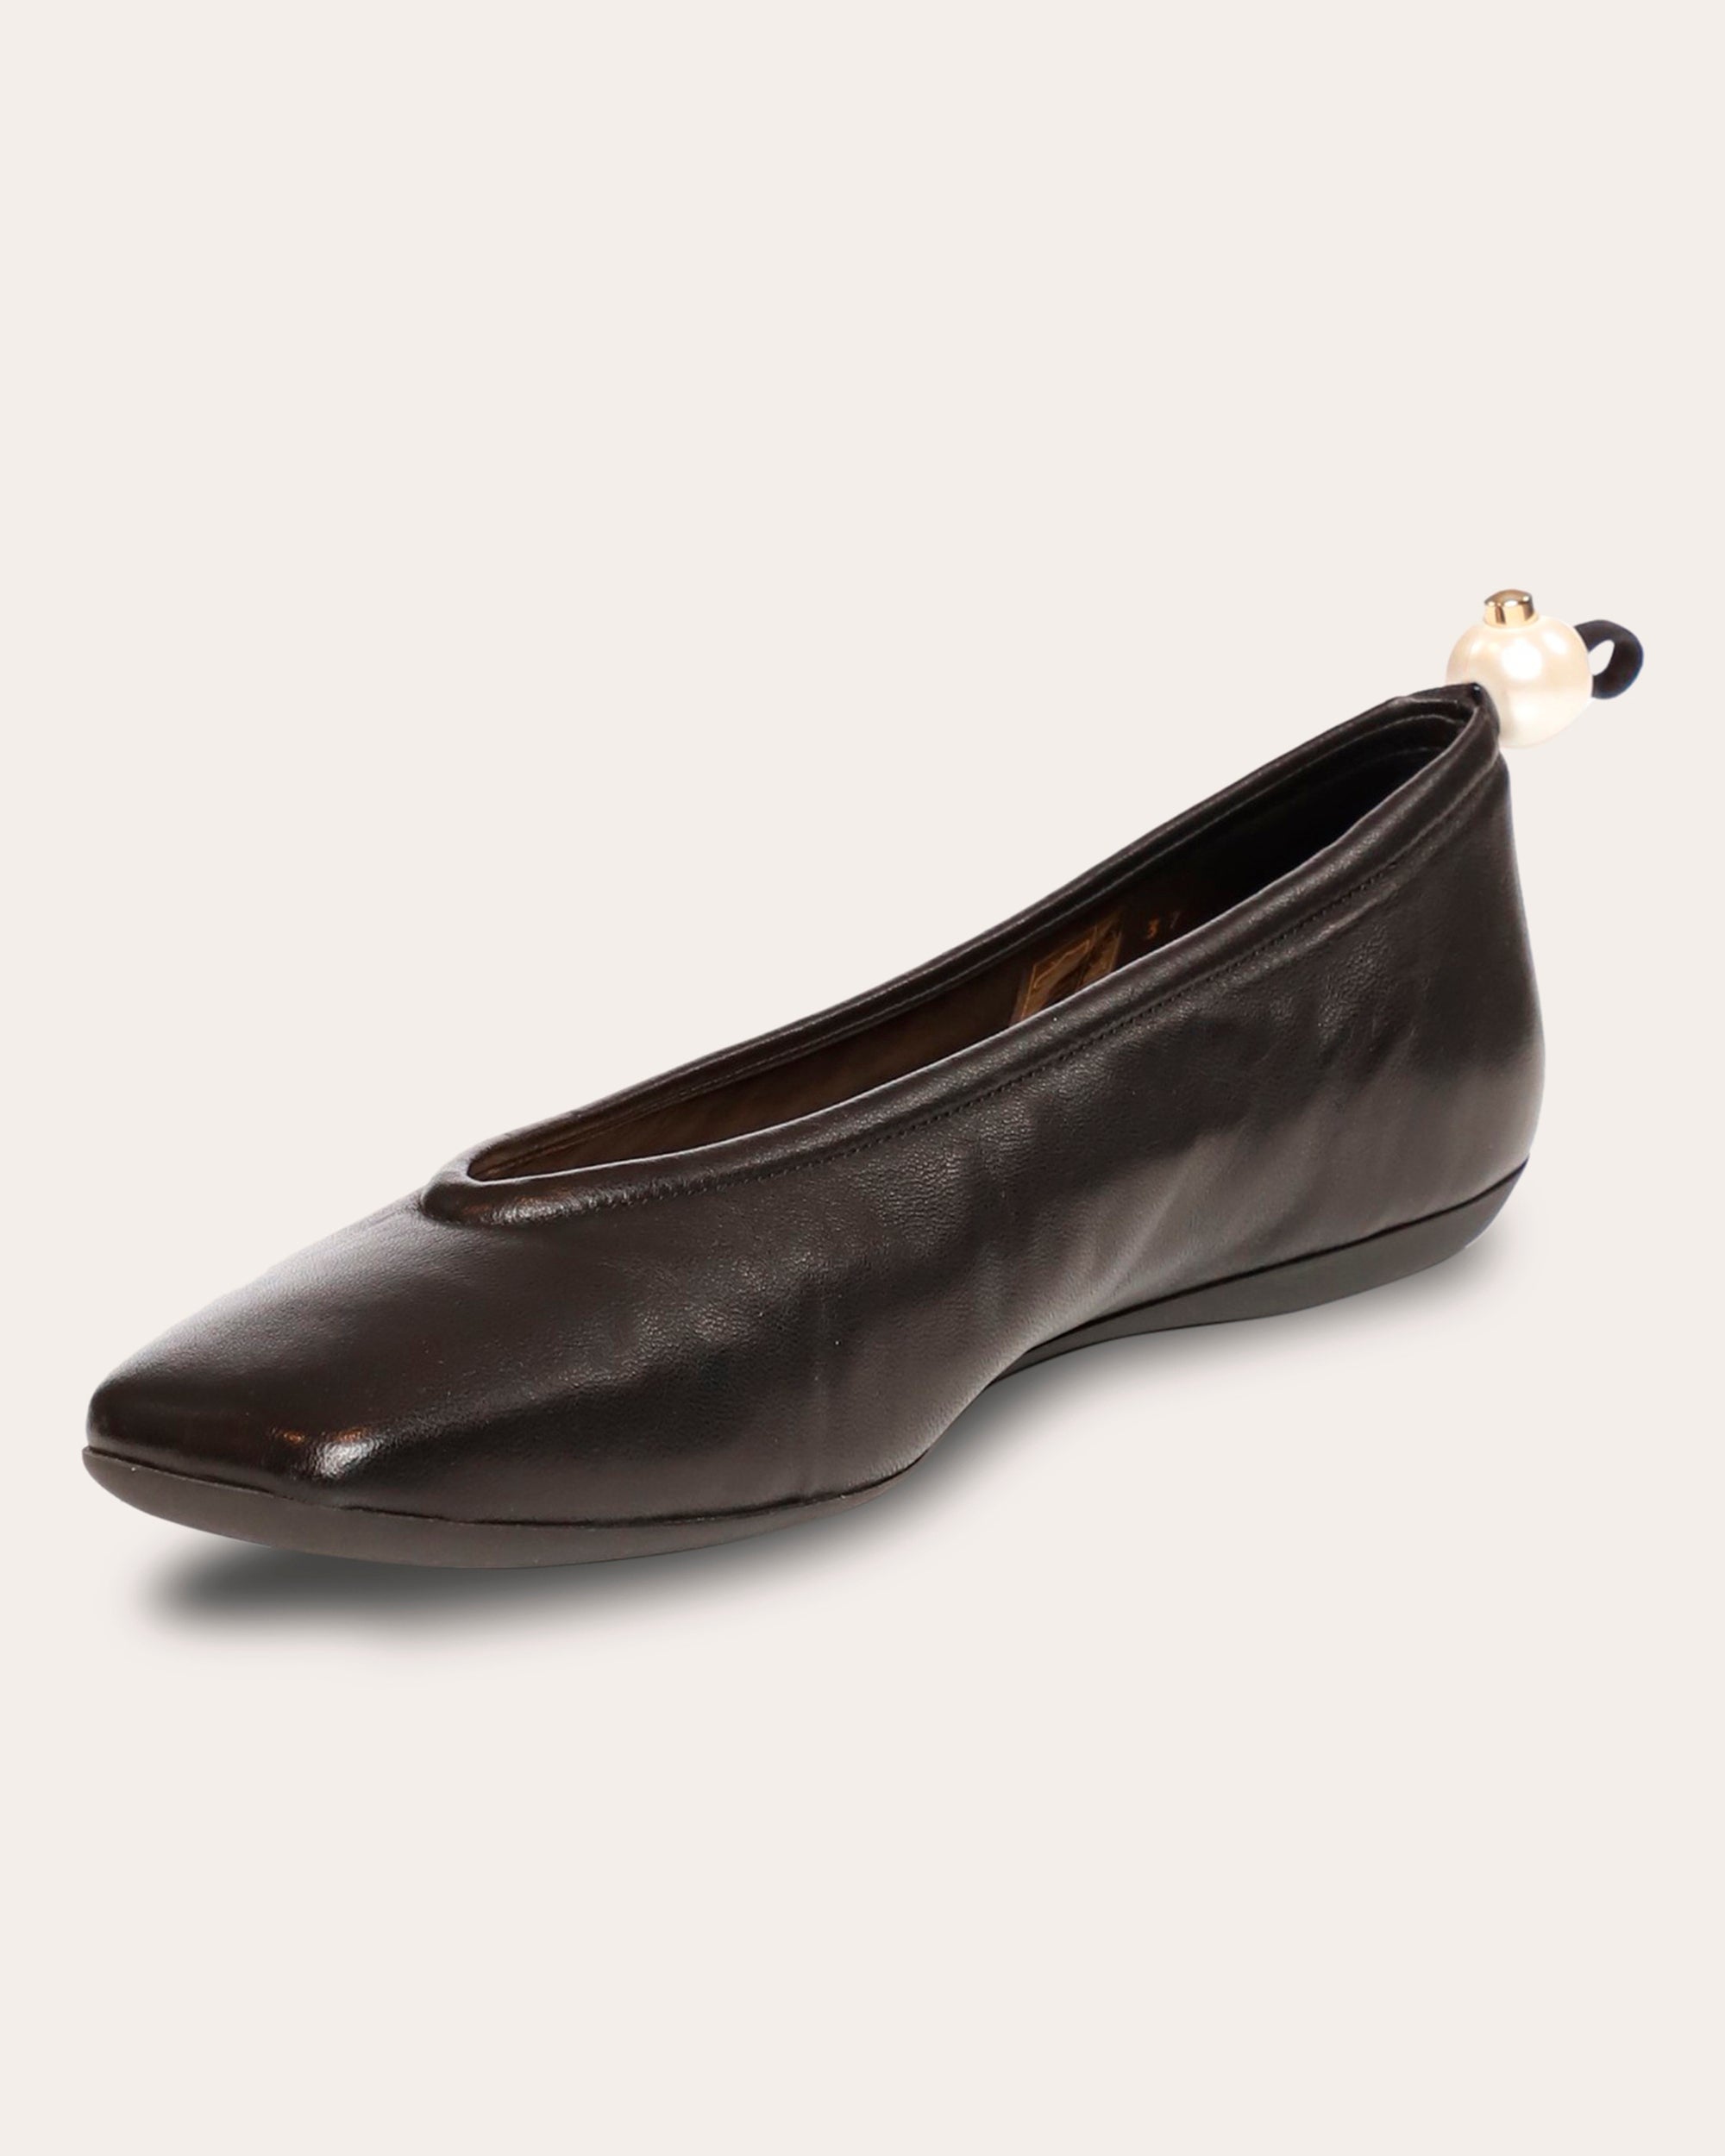 Nicholas Kirkwood - Authenticated Boots - Leather Black Plain for Women, Good Condition